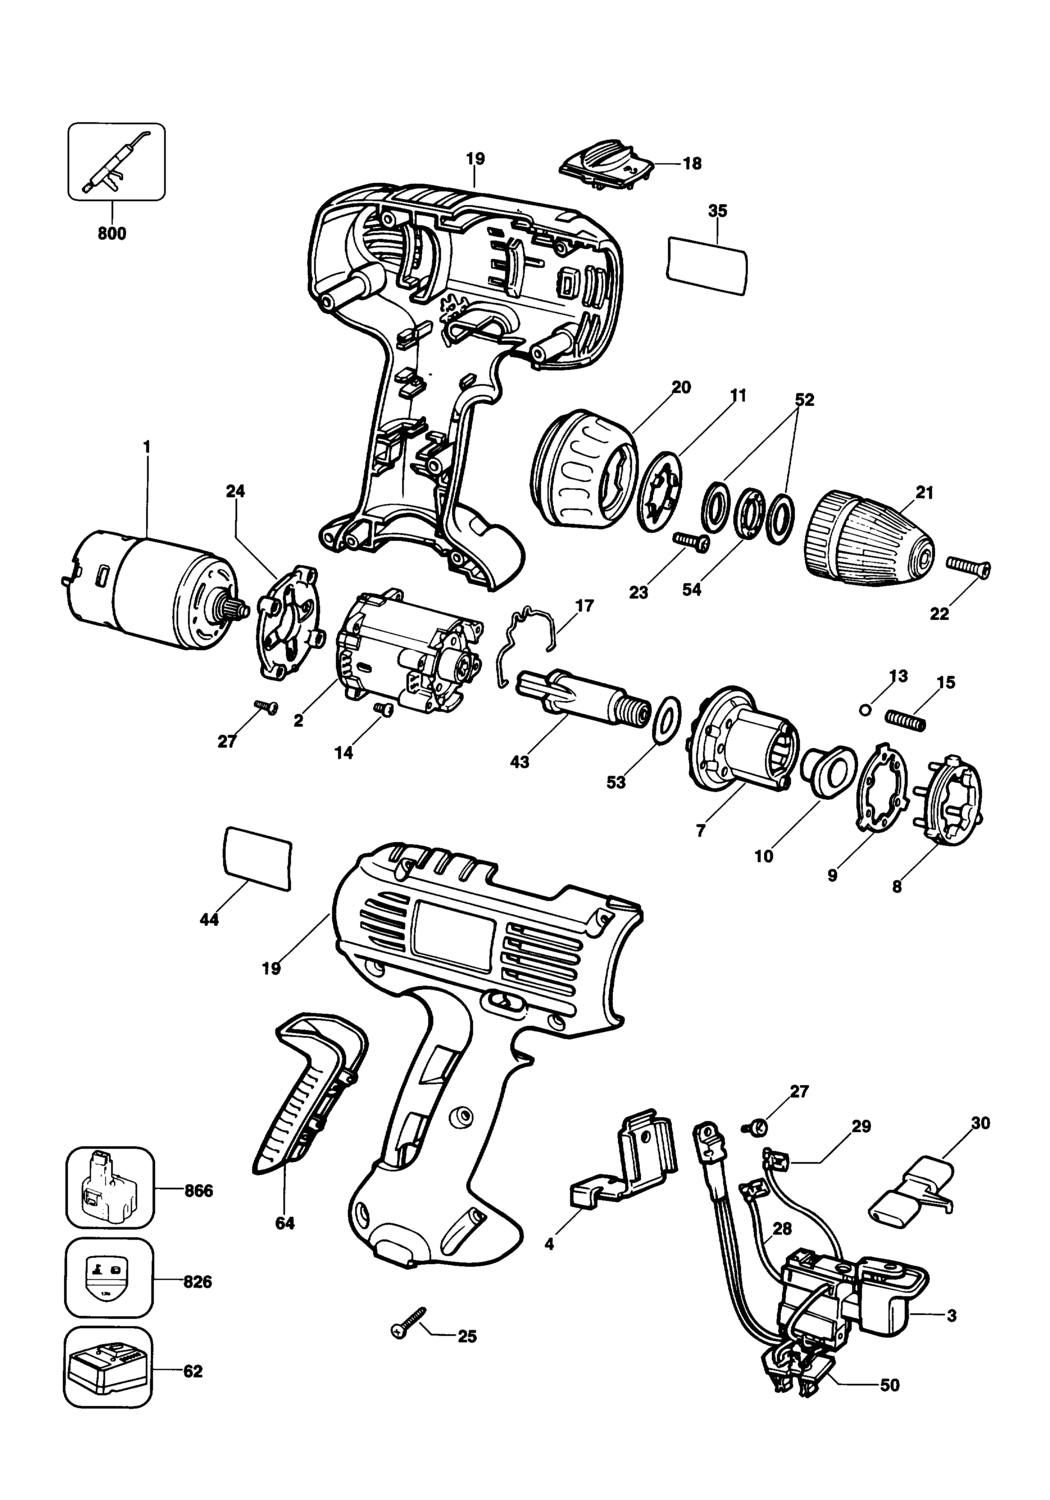 Dewalt DW922K Type 1-2 Cordless Drill Spare Parts